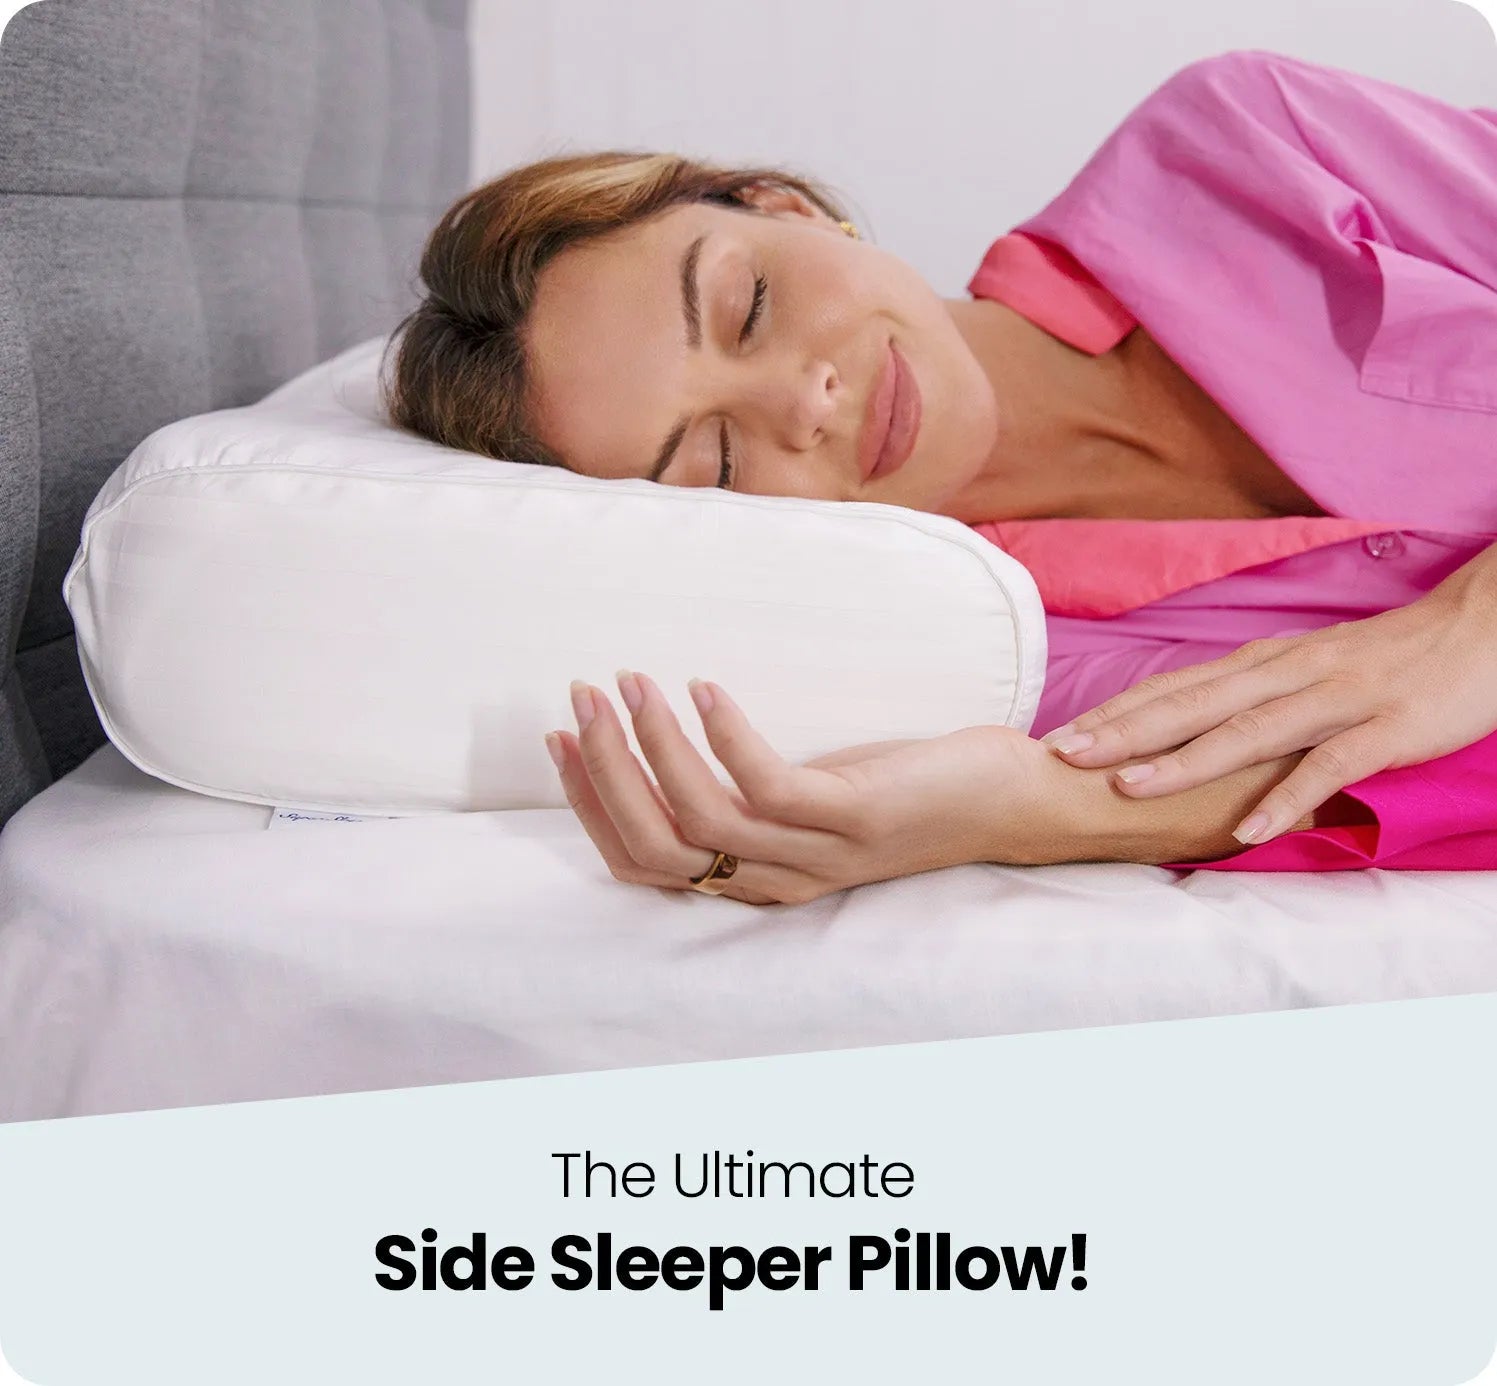 files/the_ultimate_slide_sleeper_pillow.webp